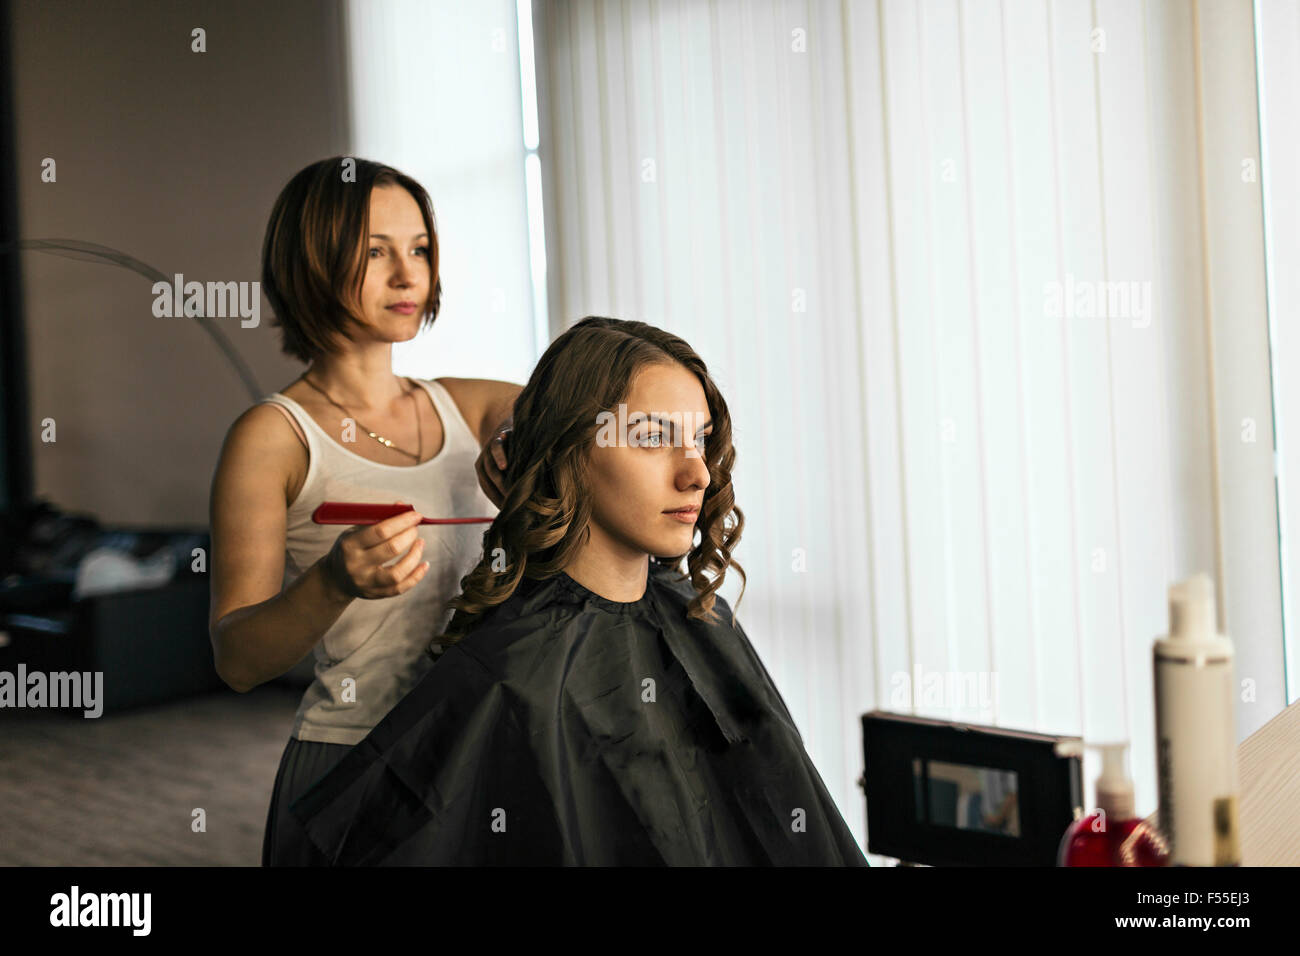 Peignage coiffure fashion model's hair at salon Banque D'Images